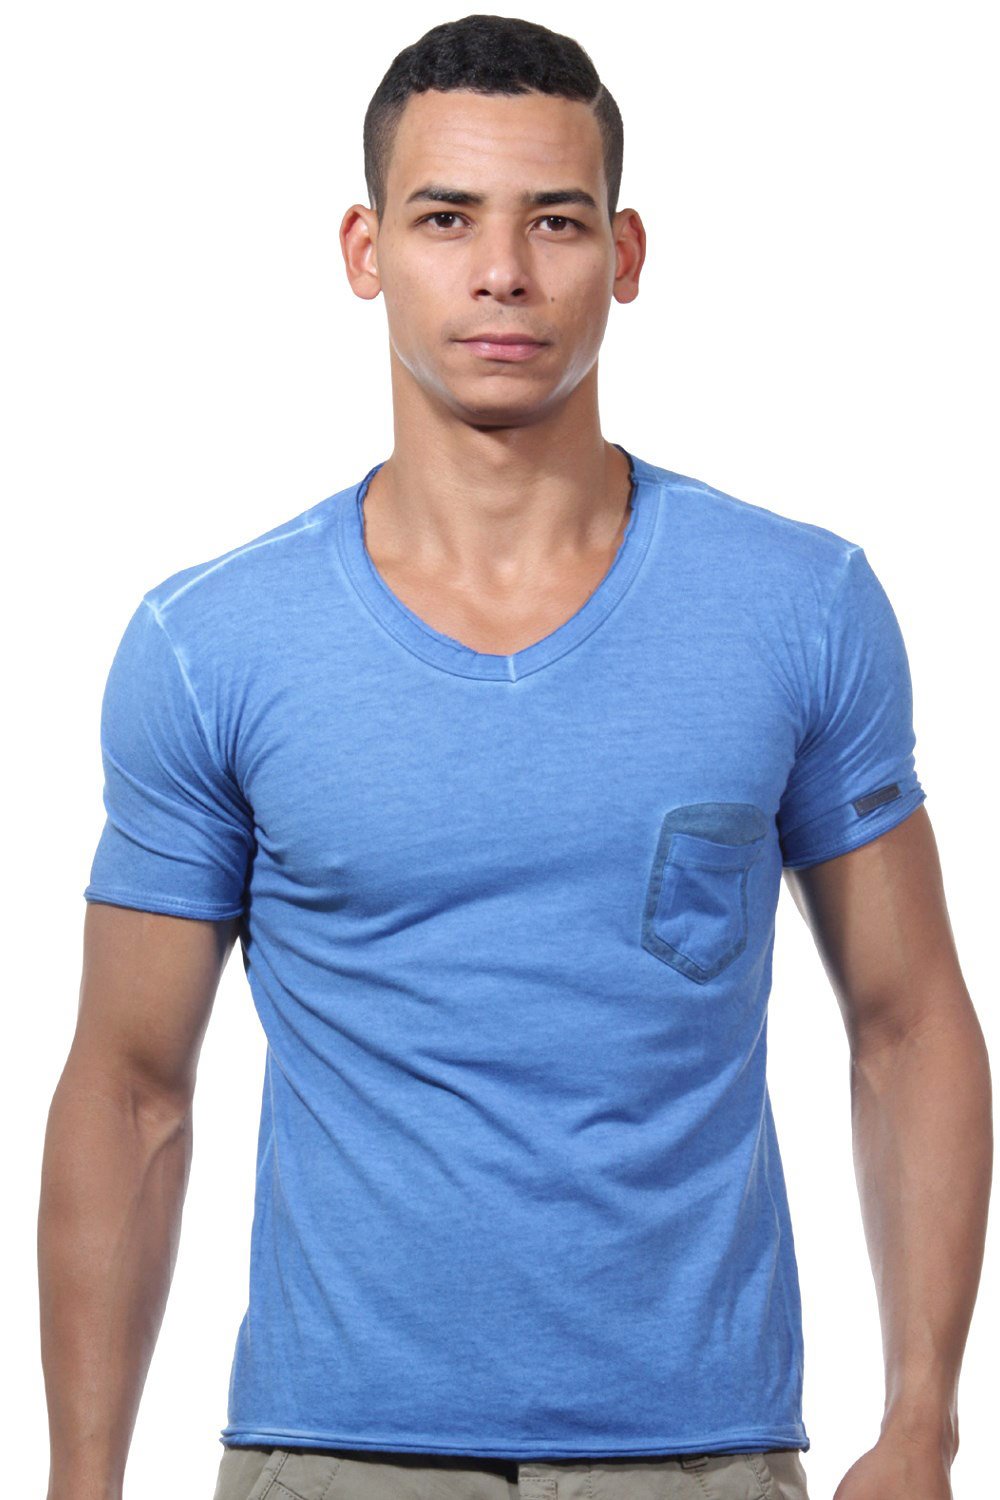 EXUMA t-shirt v-neck slim fit at oboy.com